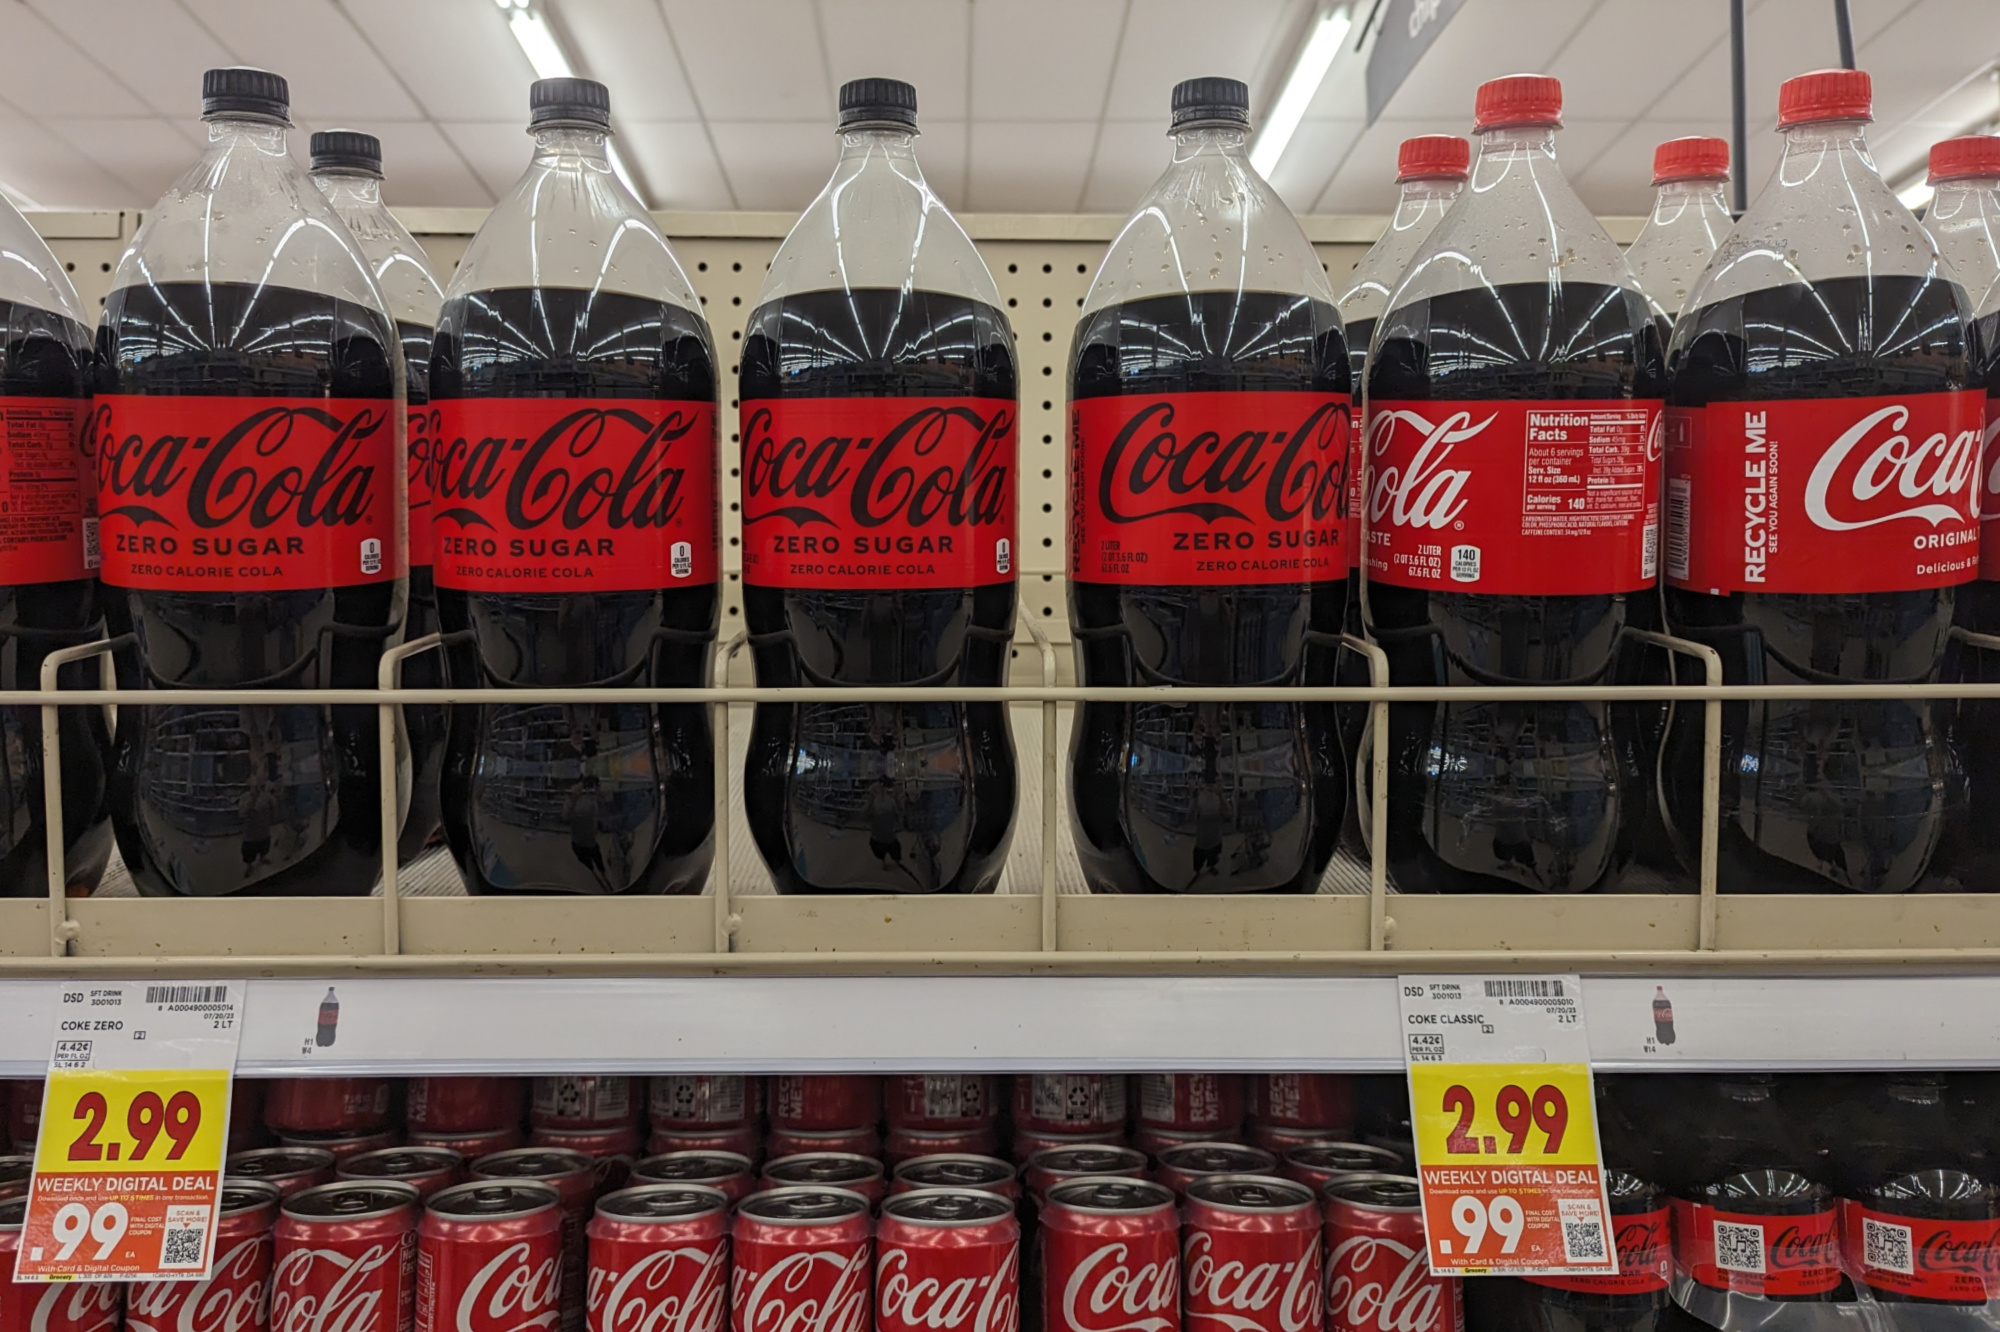 Pepsi Cola® Zero Sugar Soda Bottle, 2 liter - Kroger